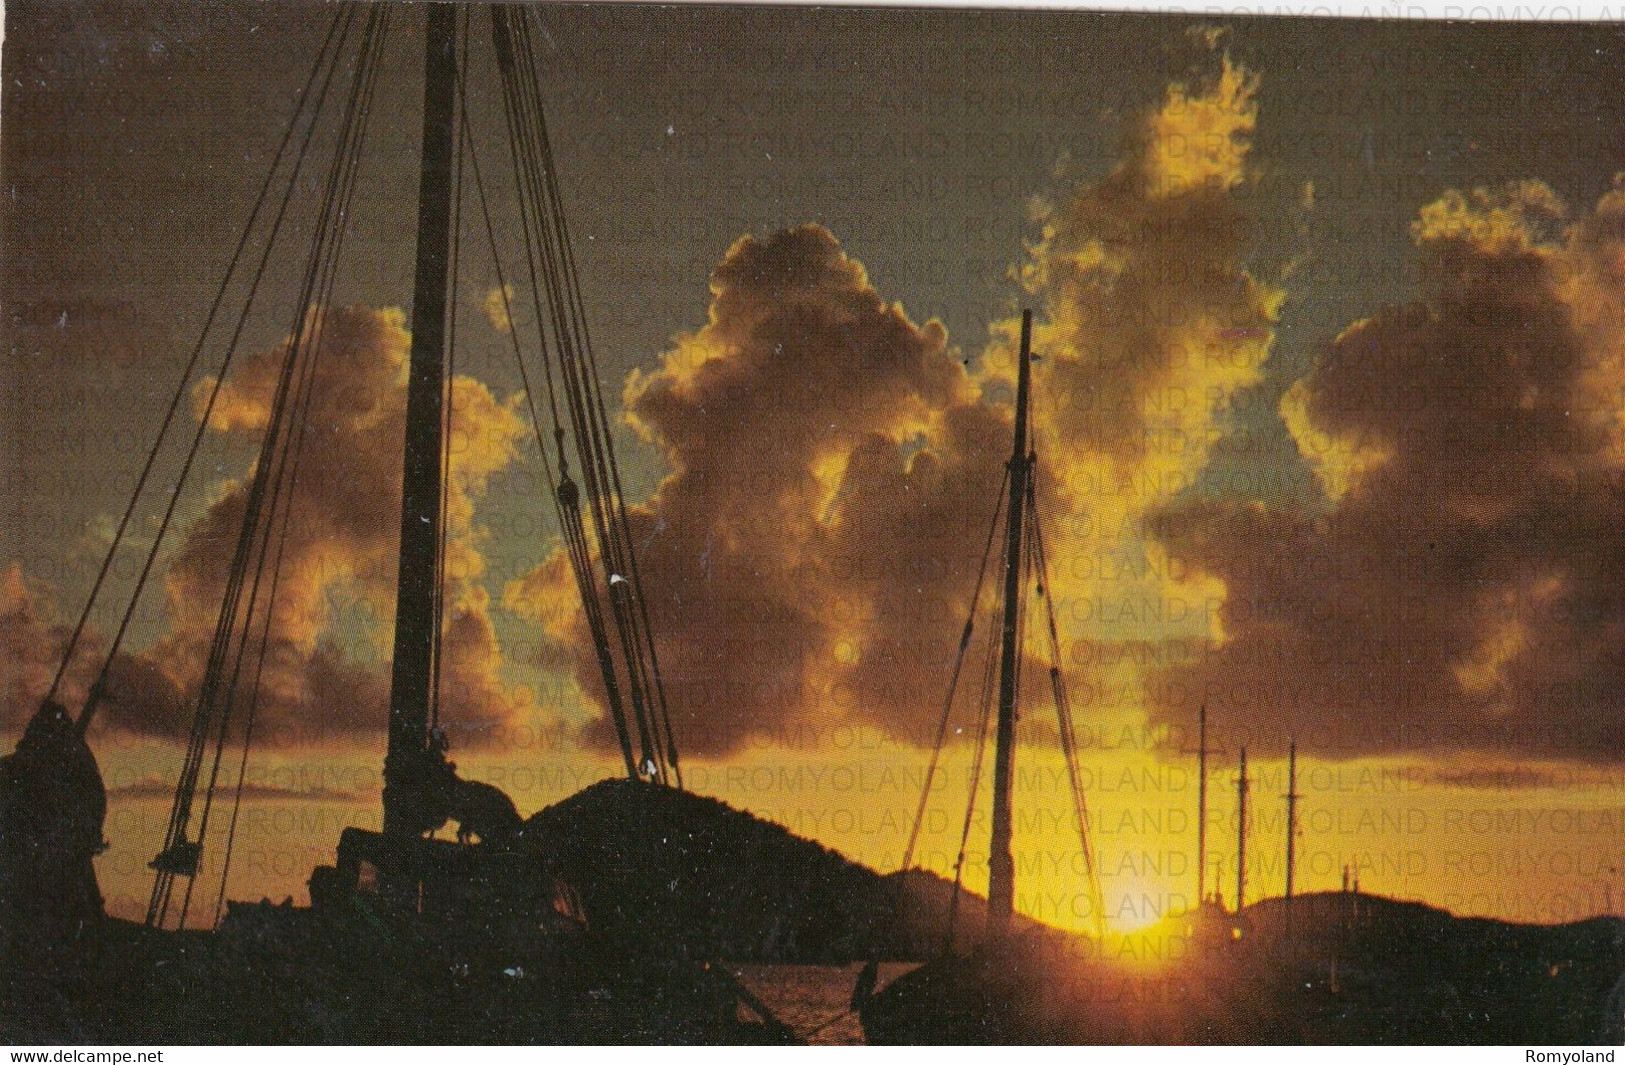 CARTOLINA  CHARLOTTE AMALIE,ANTILE,ISOLE VERGINI AMERICANE,STATI UNITI-SUNSET IN THE VIRGIN ISLANDS-VIAGGIATA 1967 - Islas Vírgenes Americanas